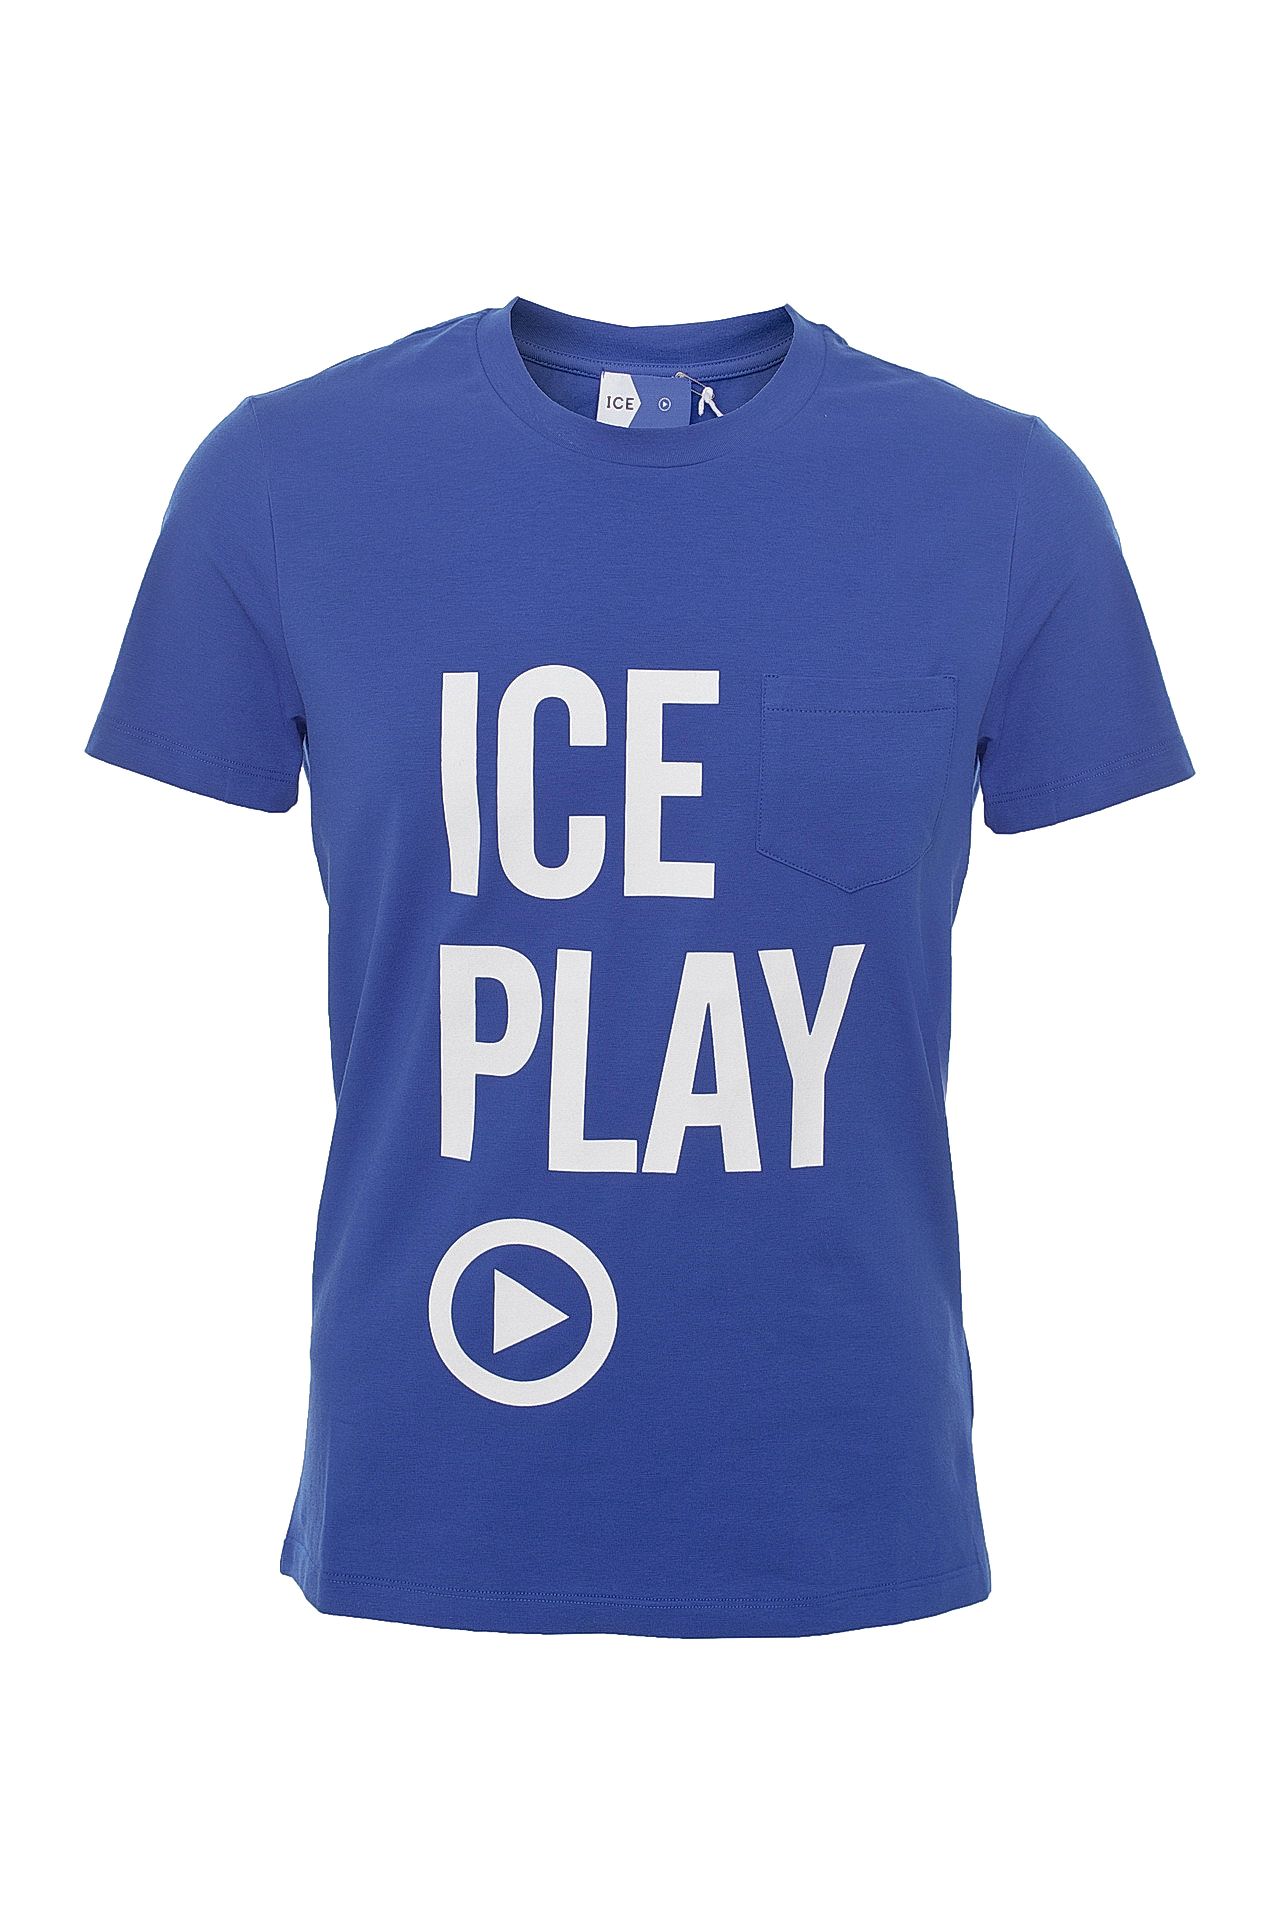 Одежда мужская Футболка ICEBERG (17P0F064P406/17.2). Купить за 3430 руб.